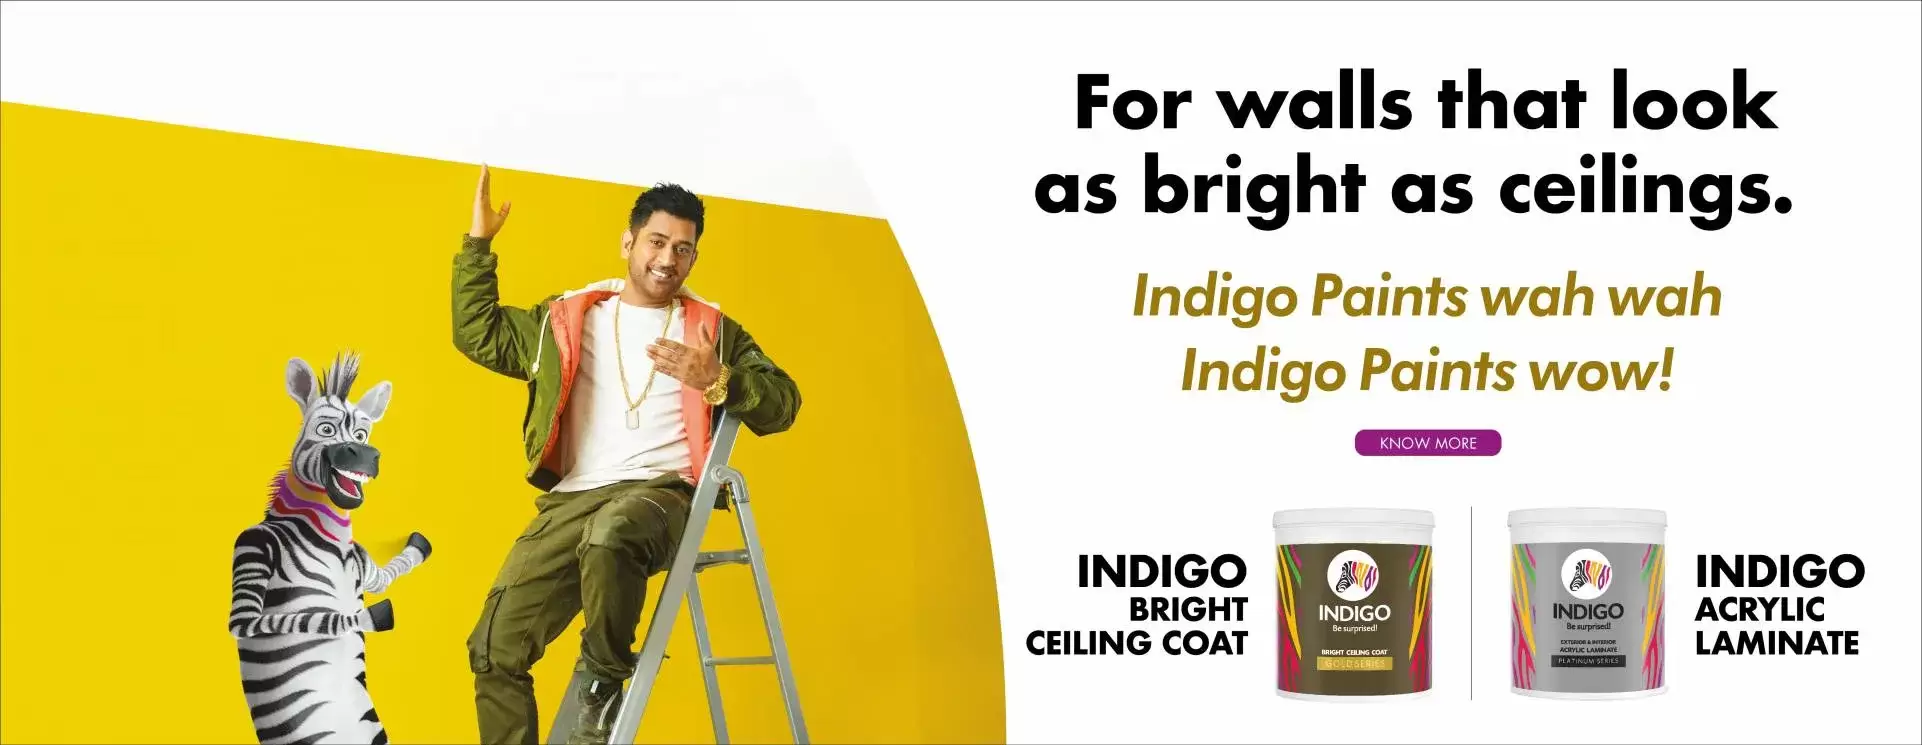 Indigo Bright Ceiling Coat & Acrylic Laminate Banner